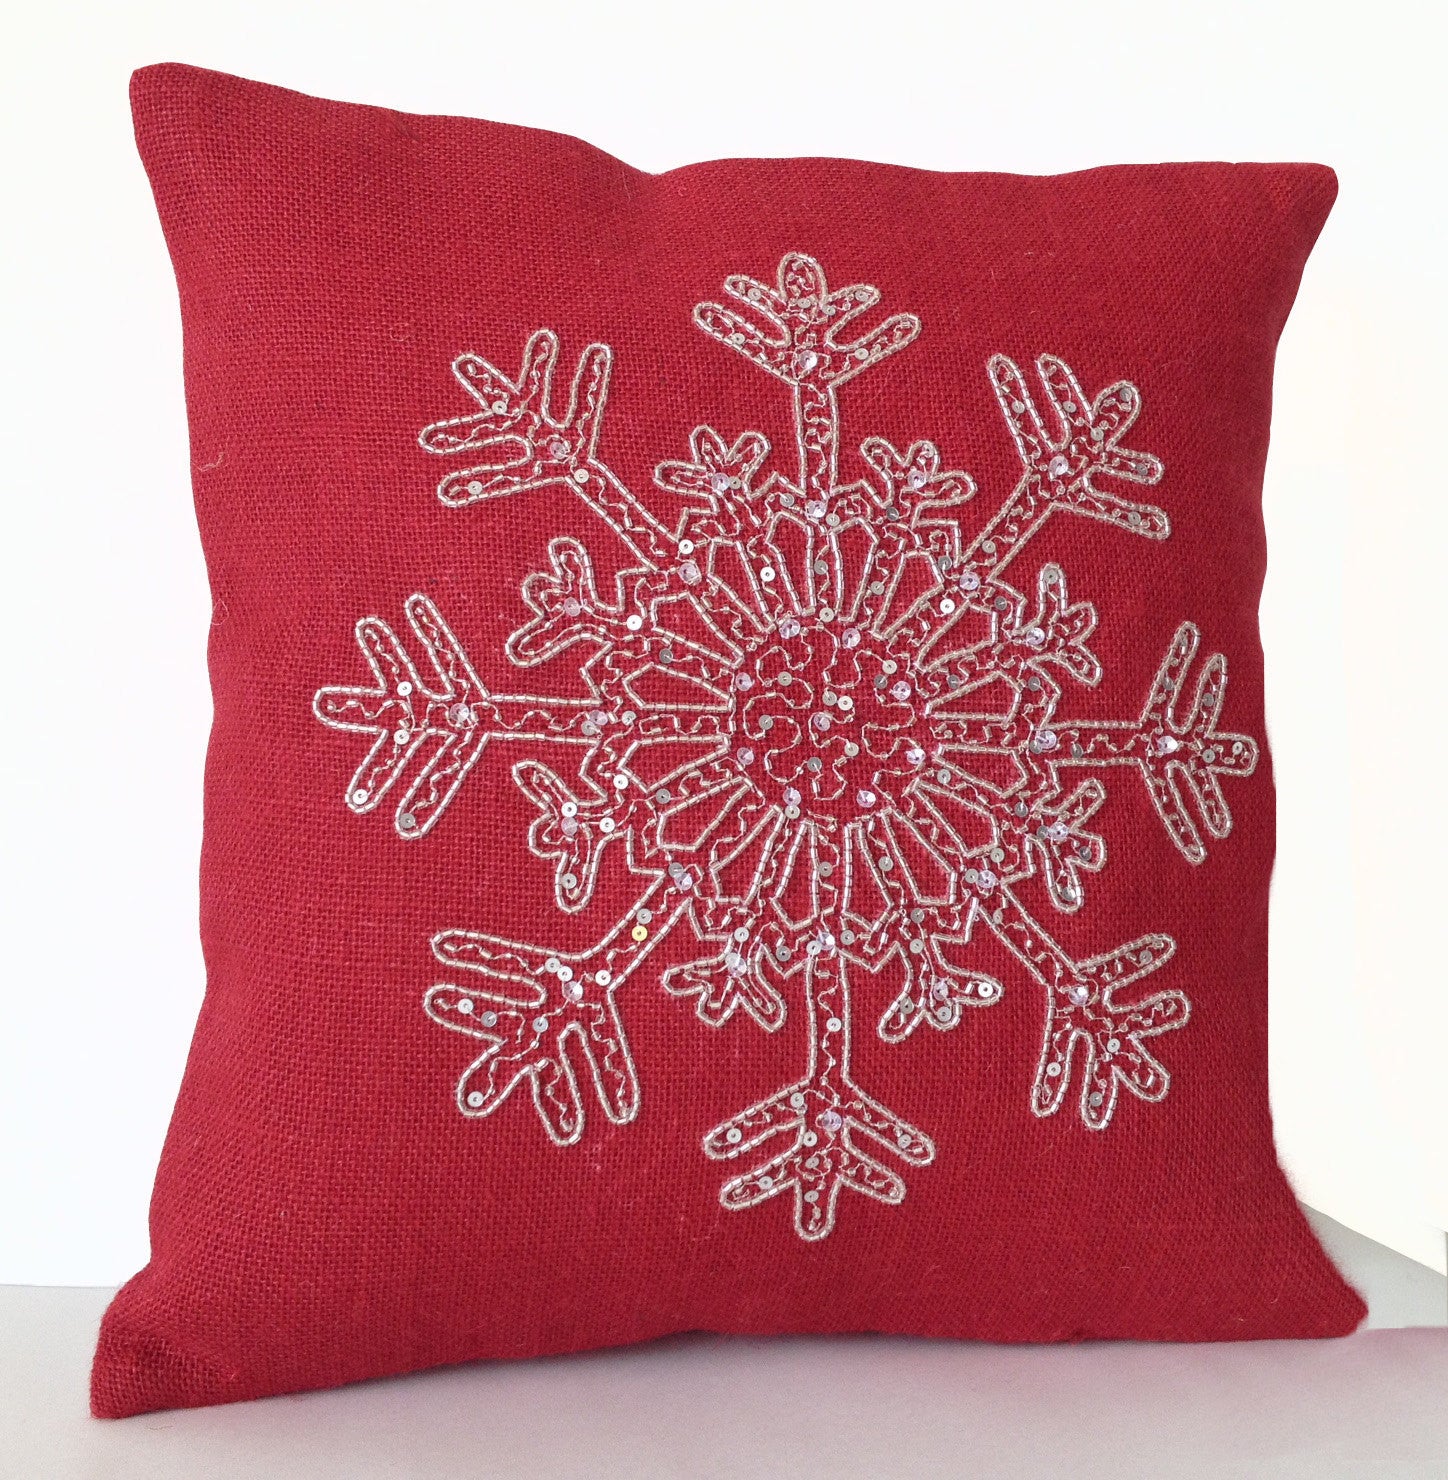 Handmade red burlap Christmas throw pillows